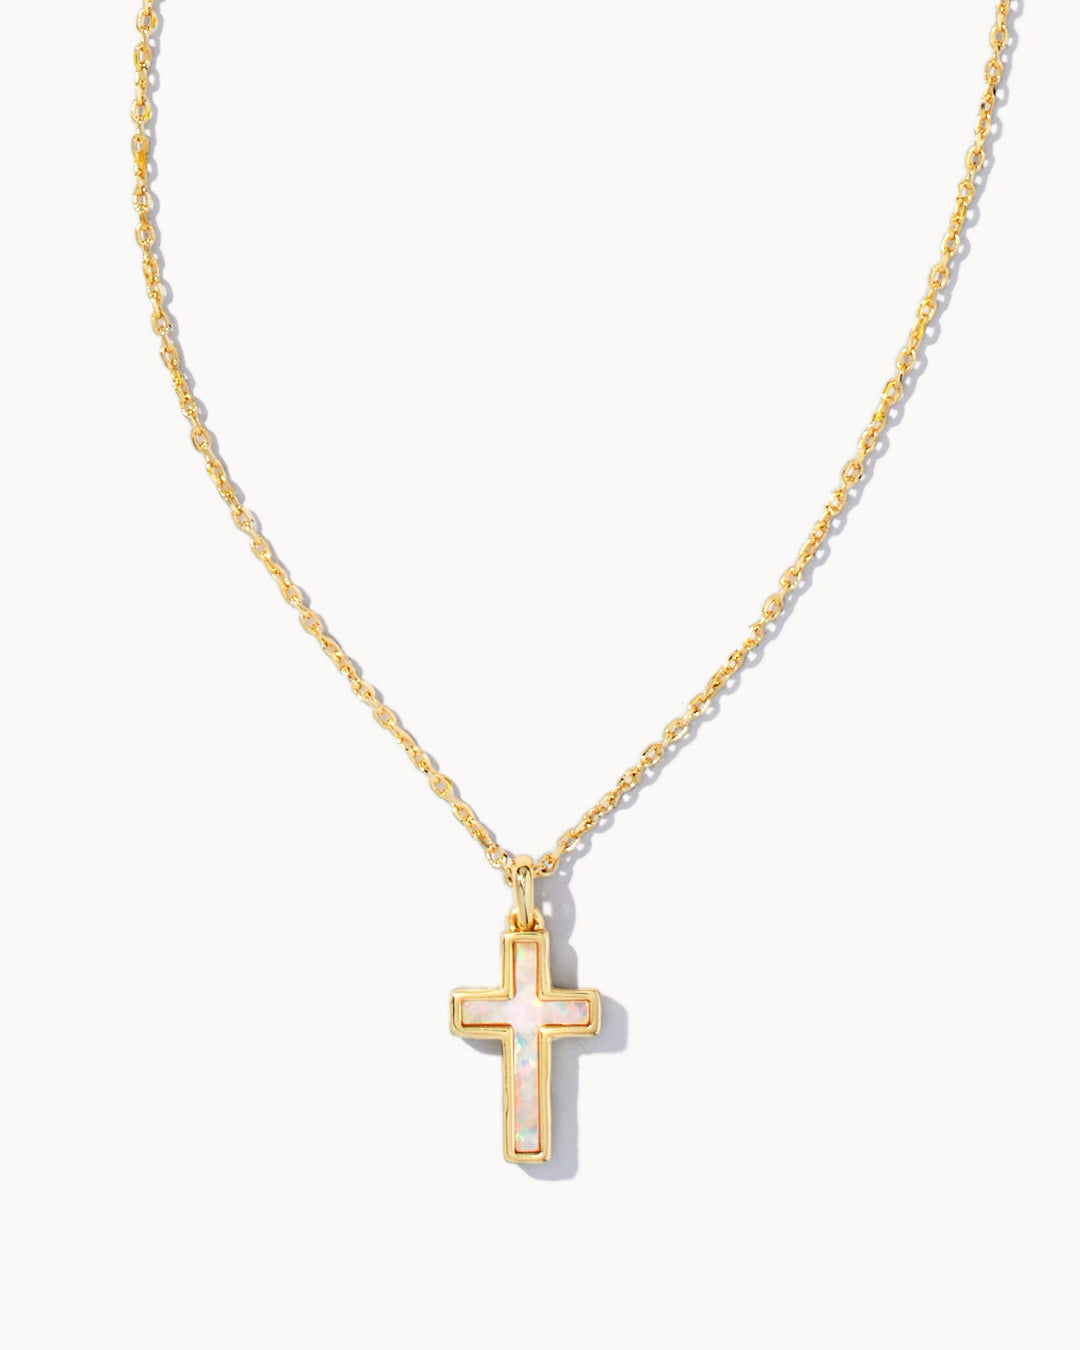 Kendra Scott Cross Pendant Necklace in Gold White Opal